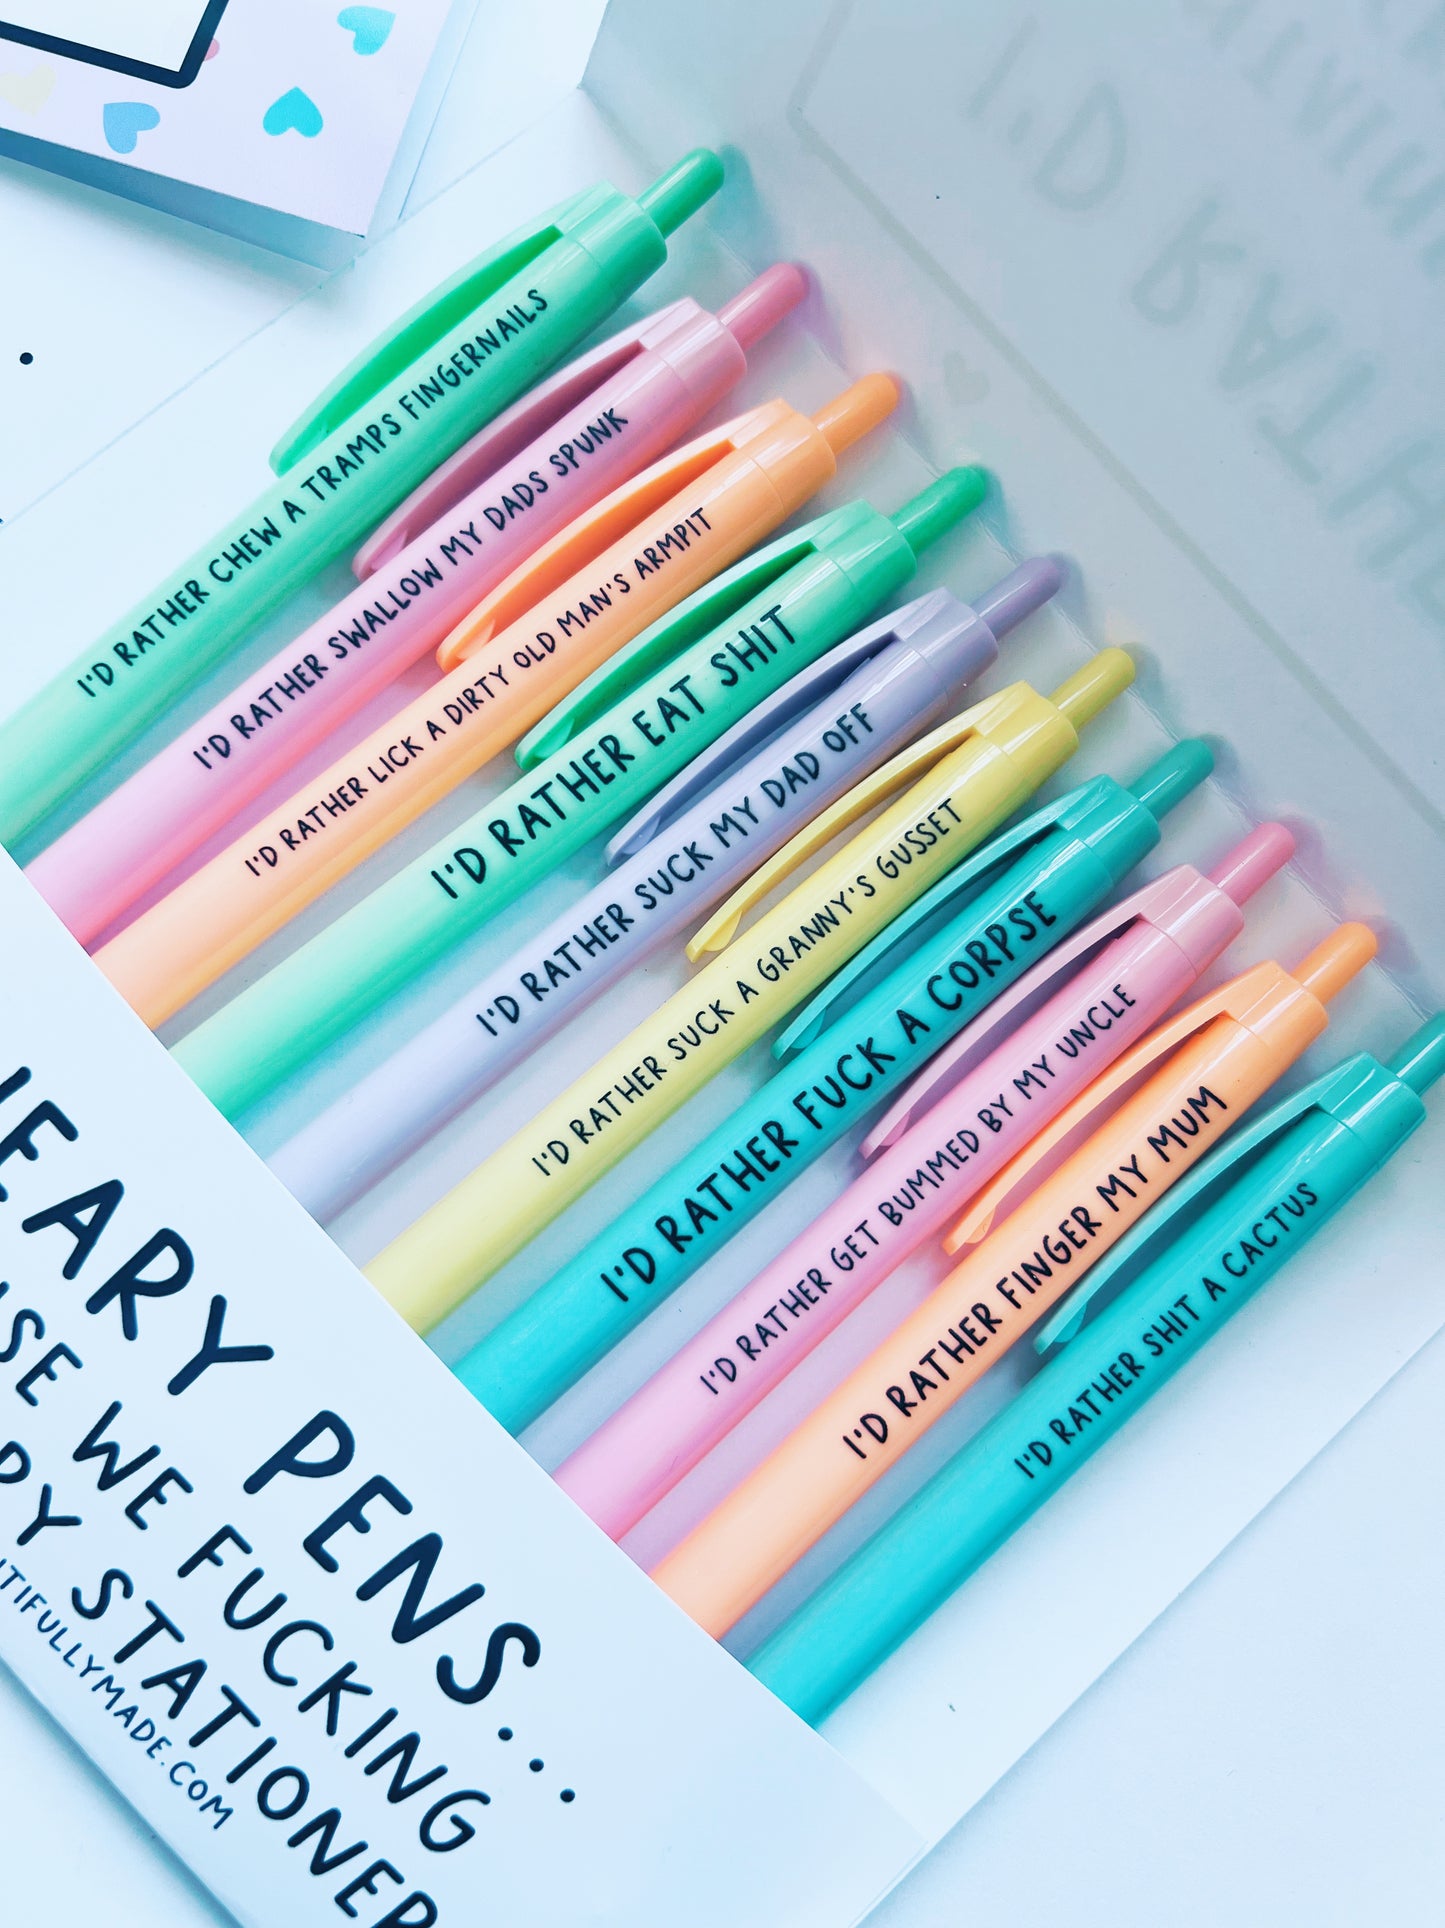 Rainbow Pen pack - I’d Rather….